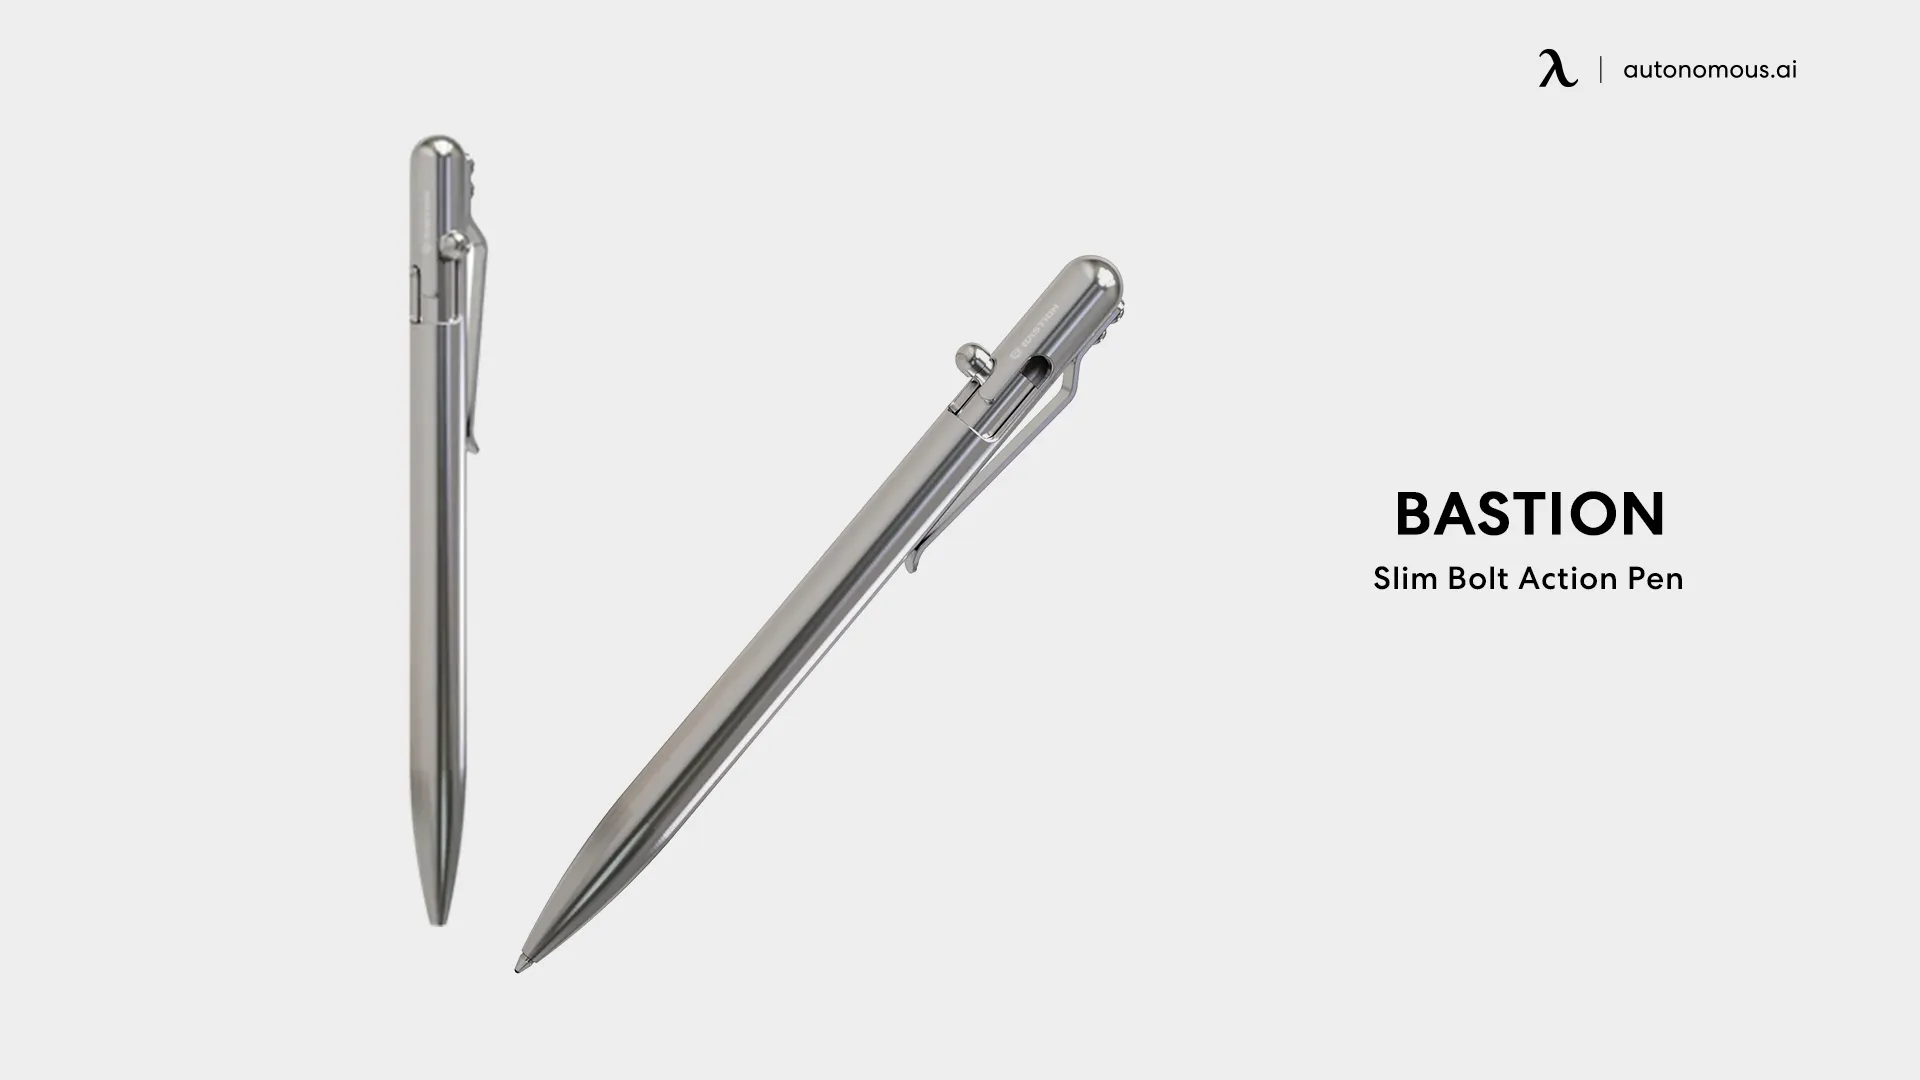 Bastion Slim Bolt Action pen for office